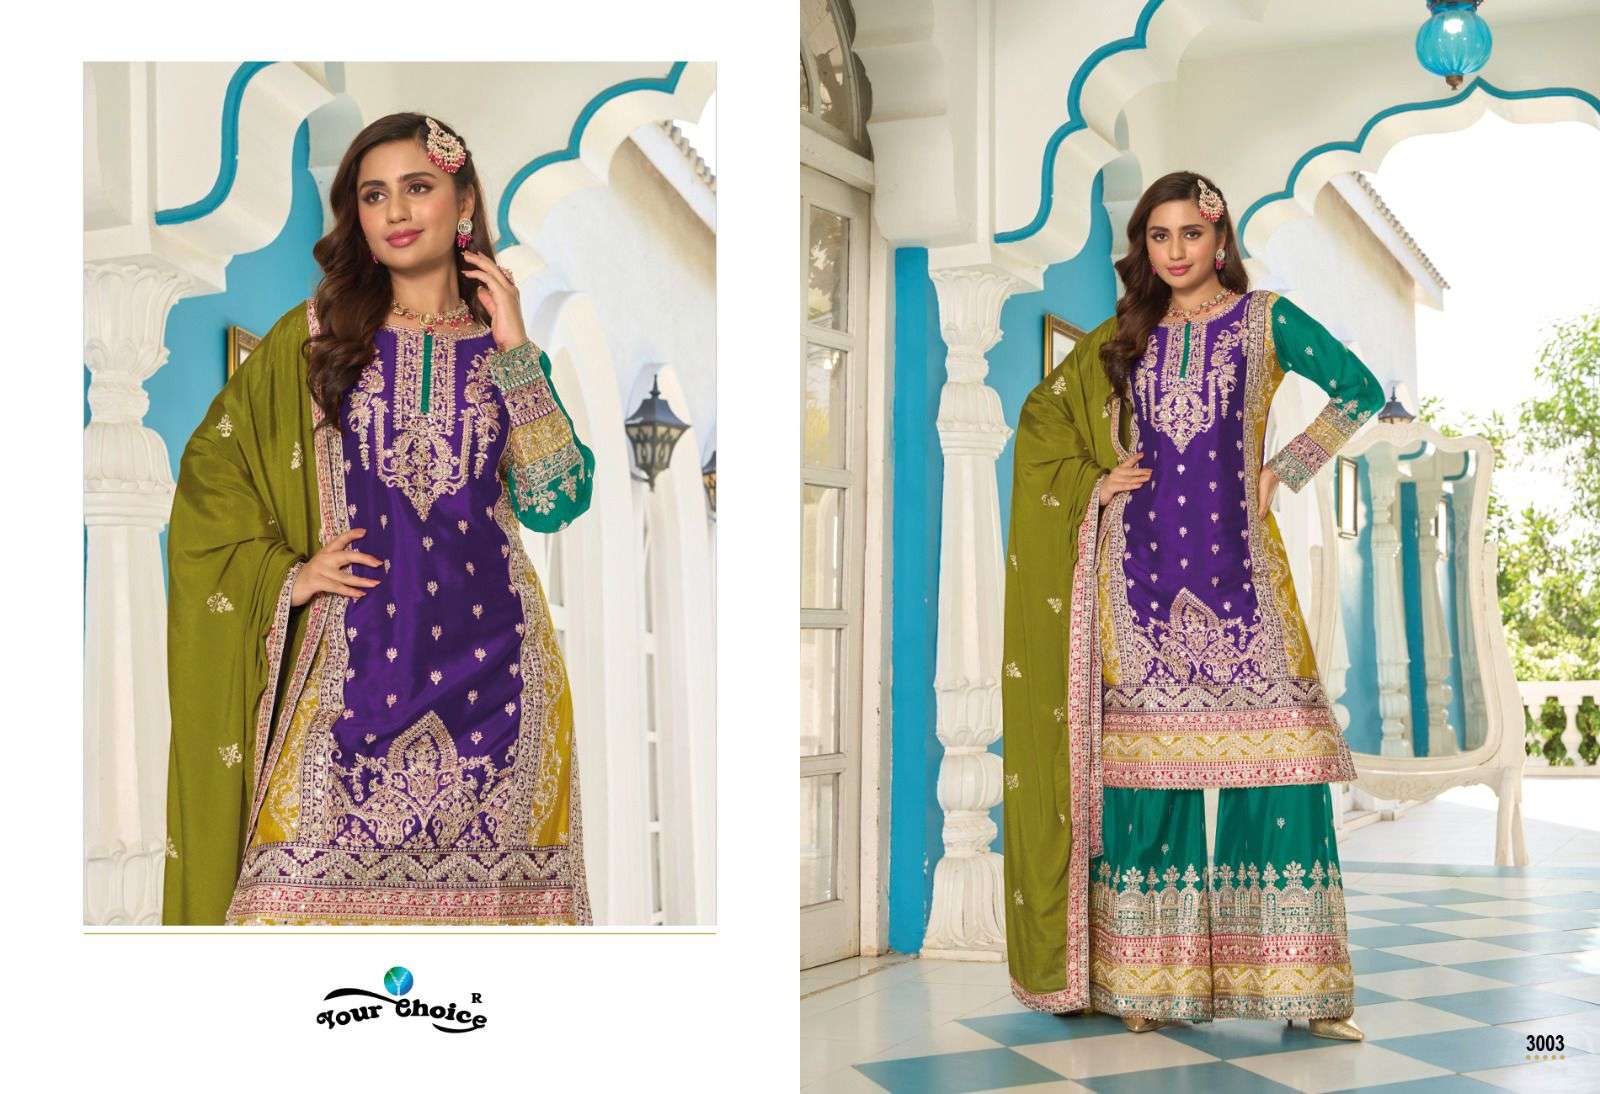 Your Choice Beeba Fancy Chinon Salwar Suit Wholesale catalog